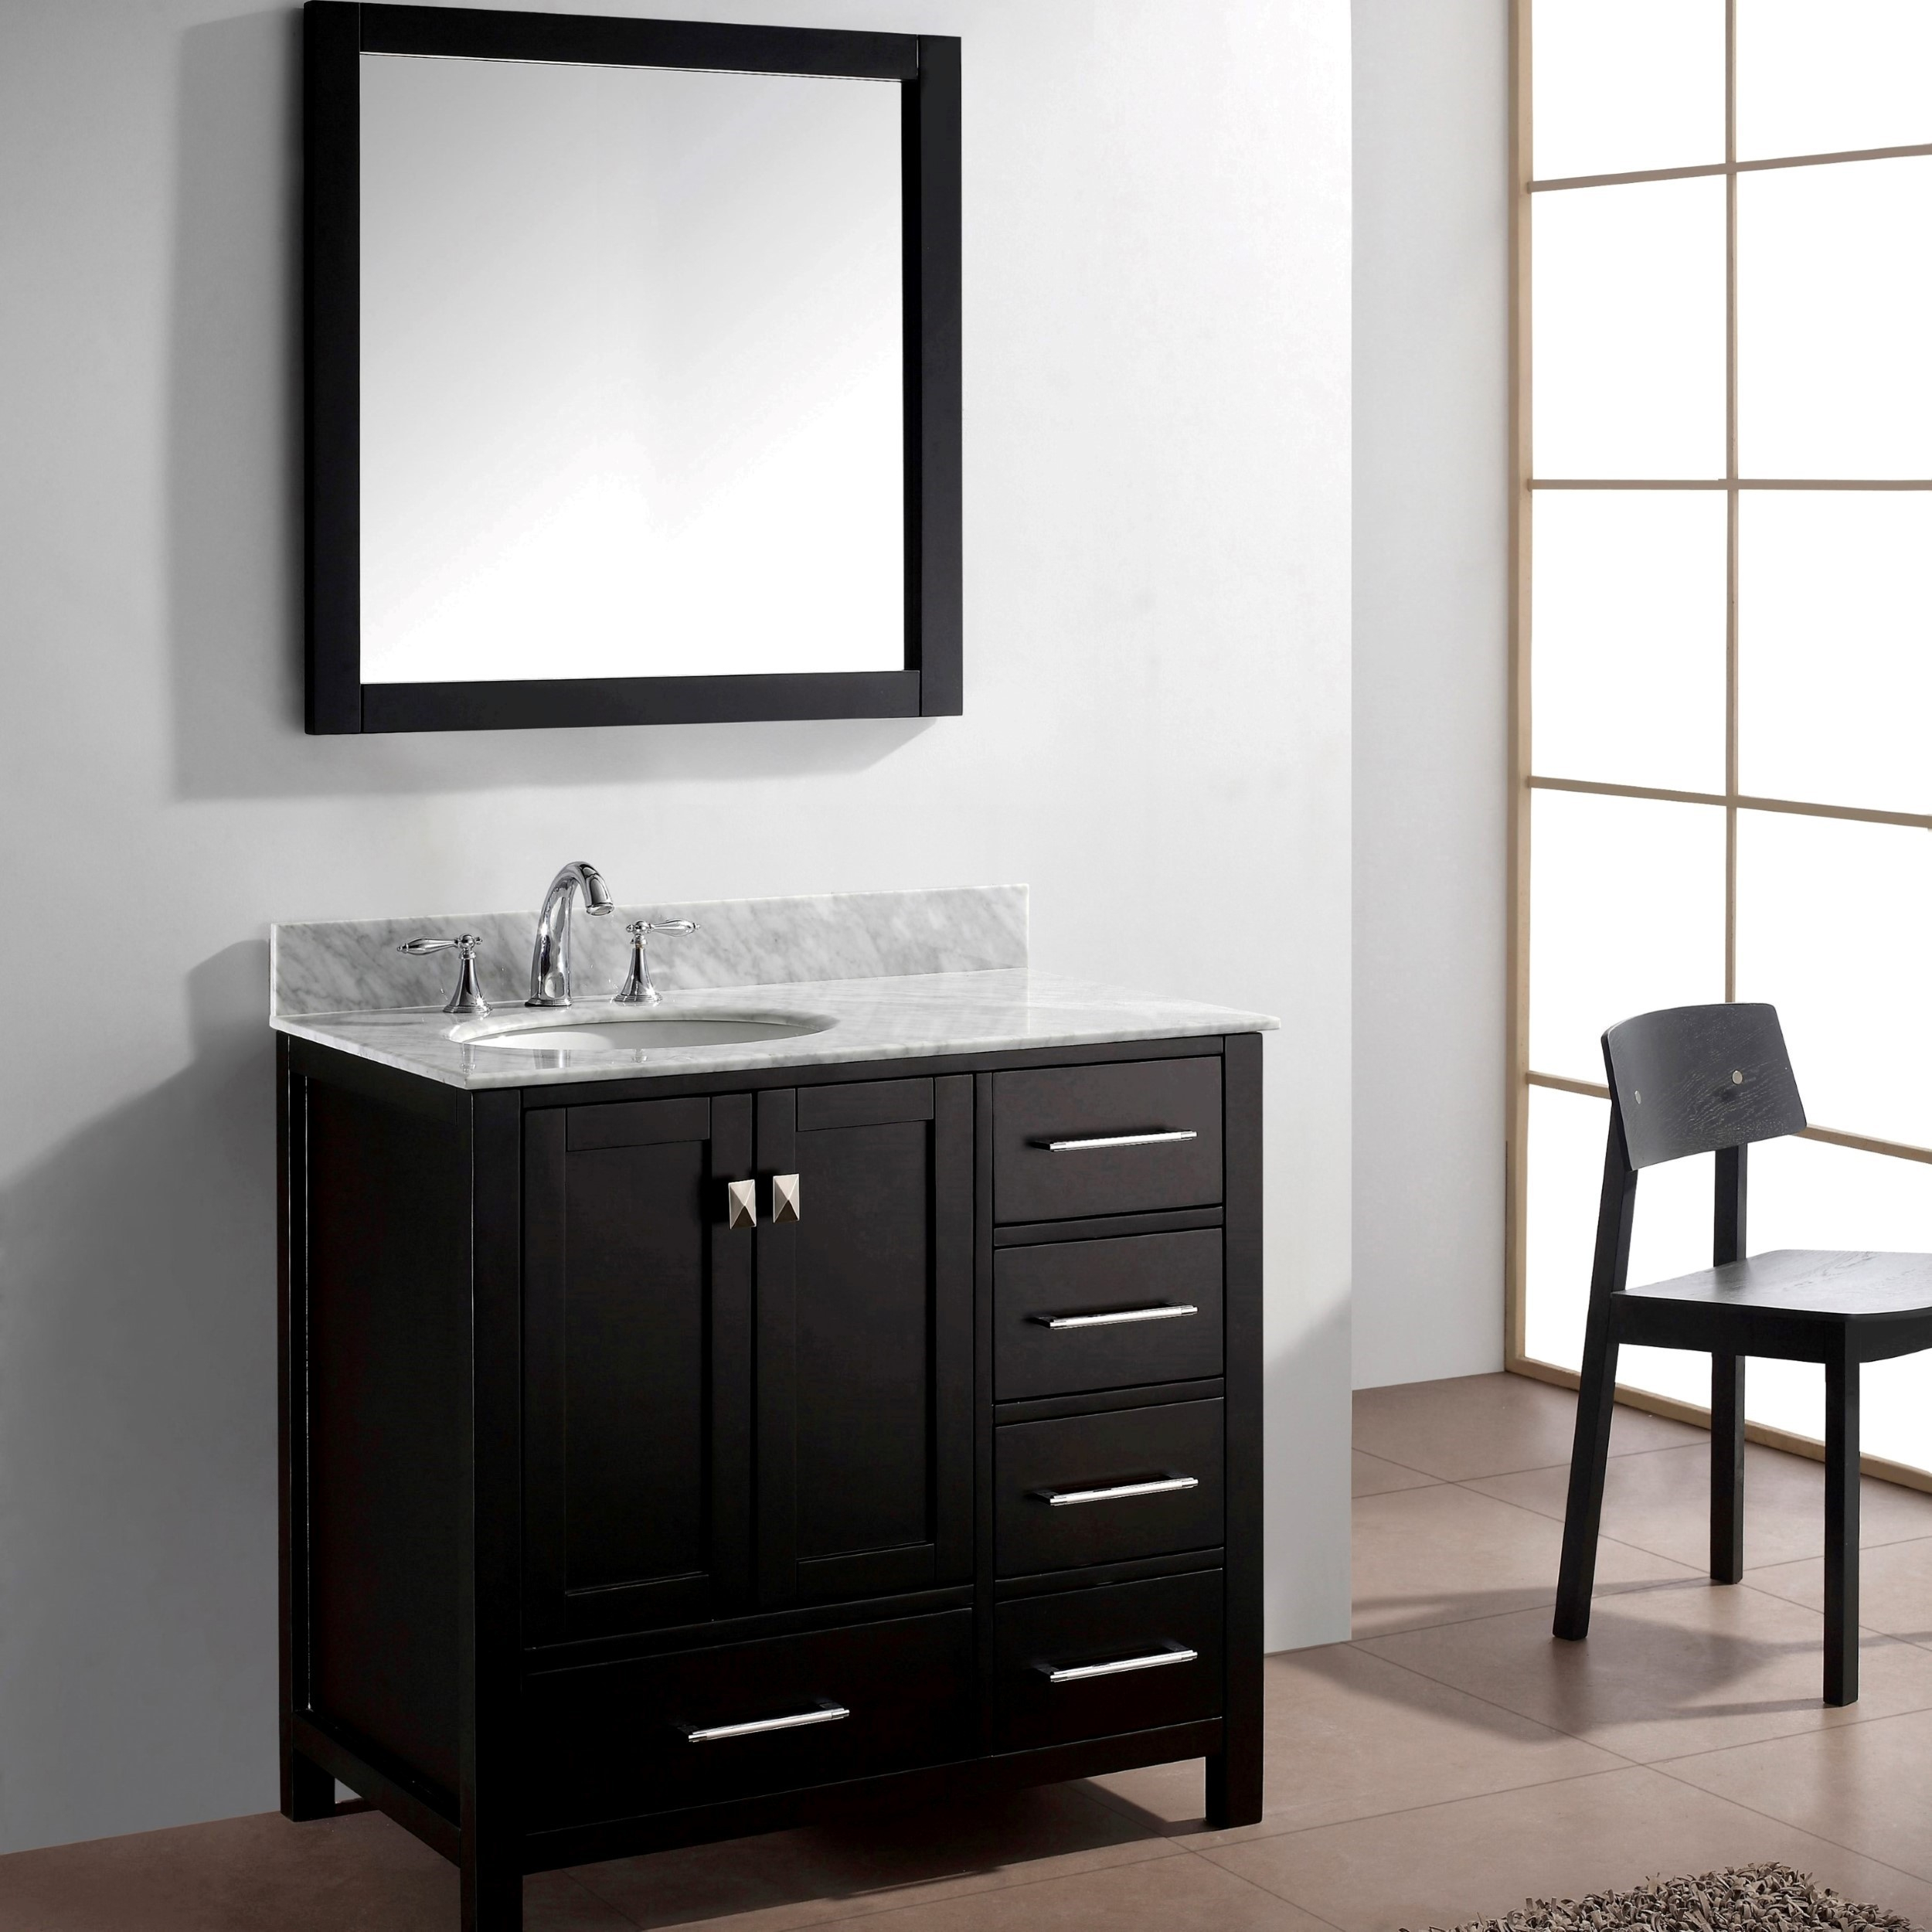 Virtu Usa Caroline Avenue 36 Single Bathroom Vanity Set In Espresso with regard to size 2500 X 2500